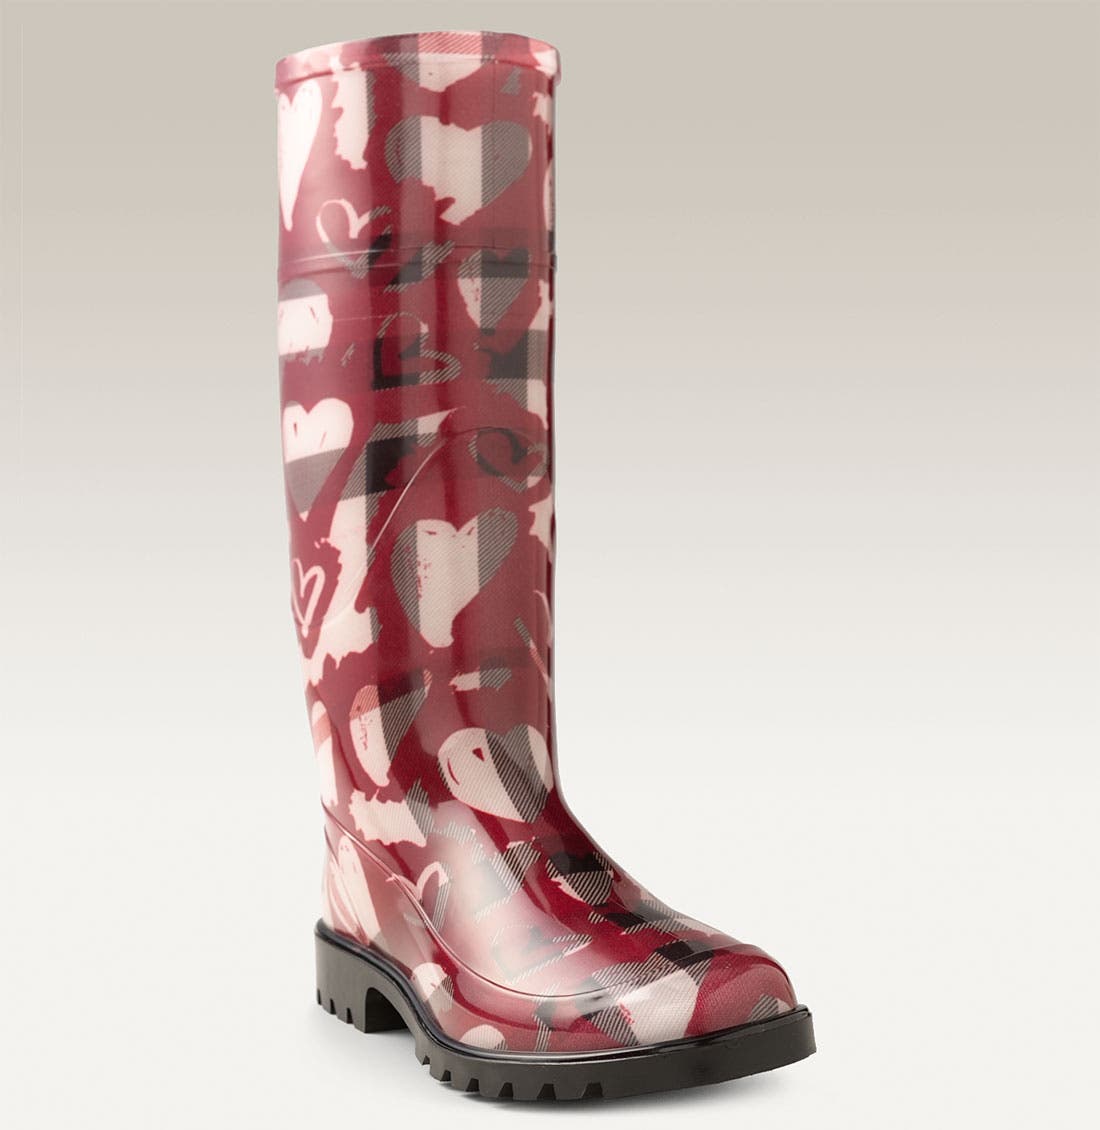 burberry rain boots nordstrom